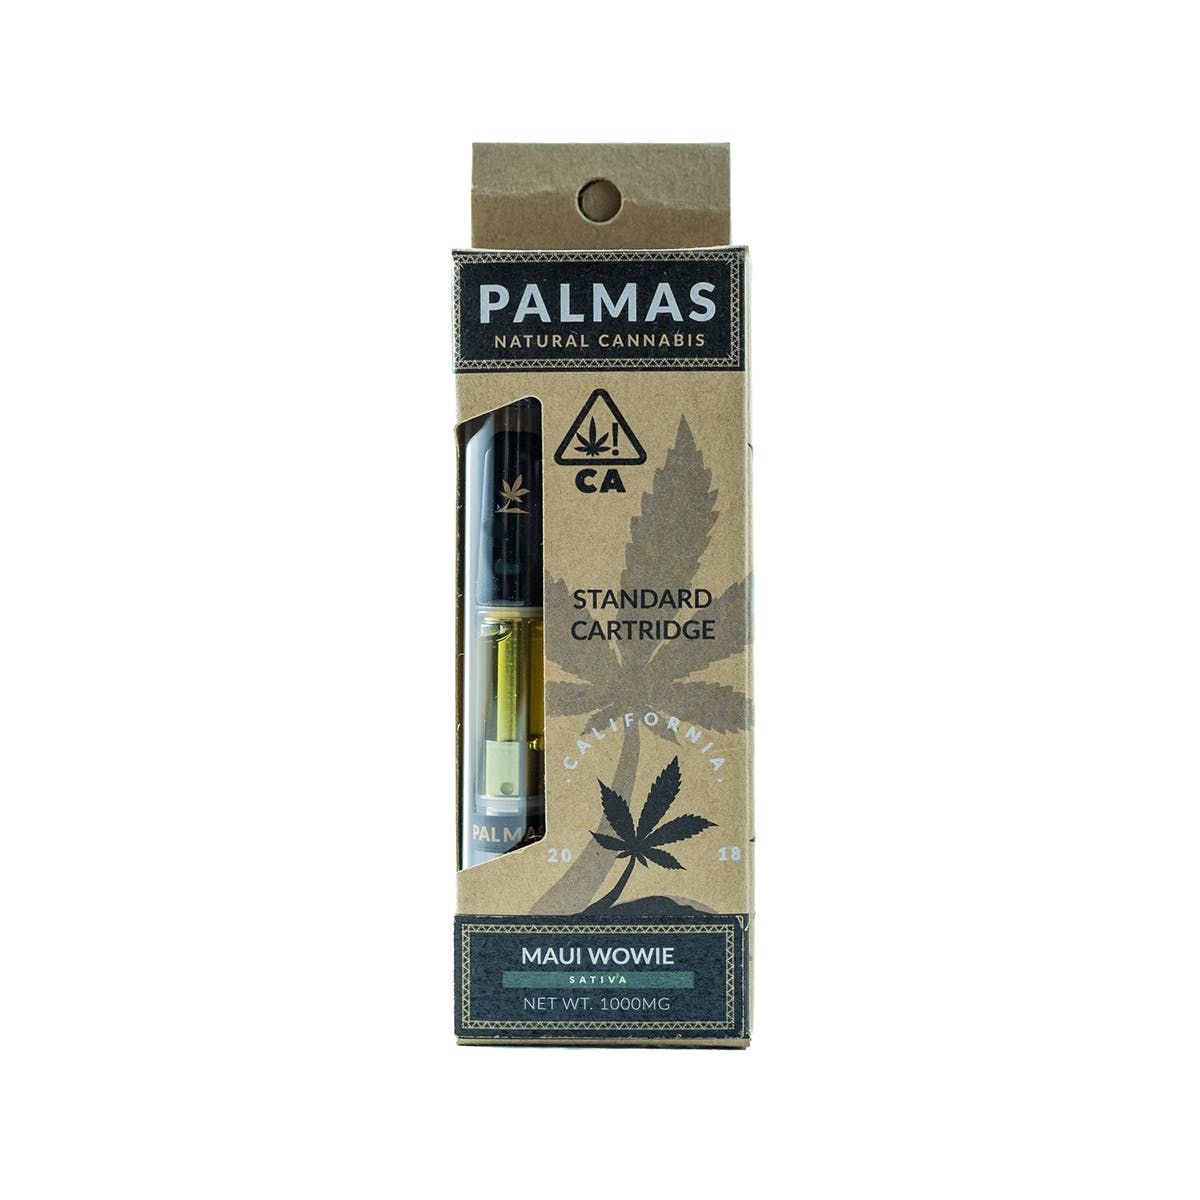 Palmas Standard Cartridge - Maui Wowie